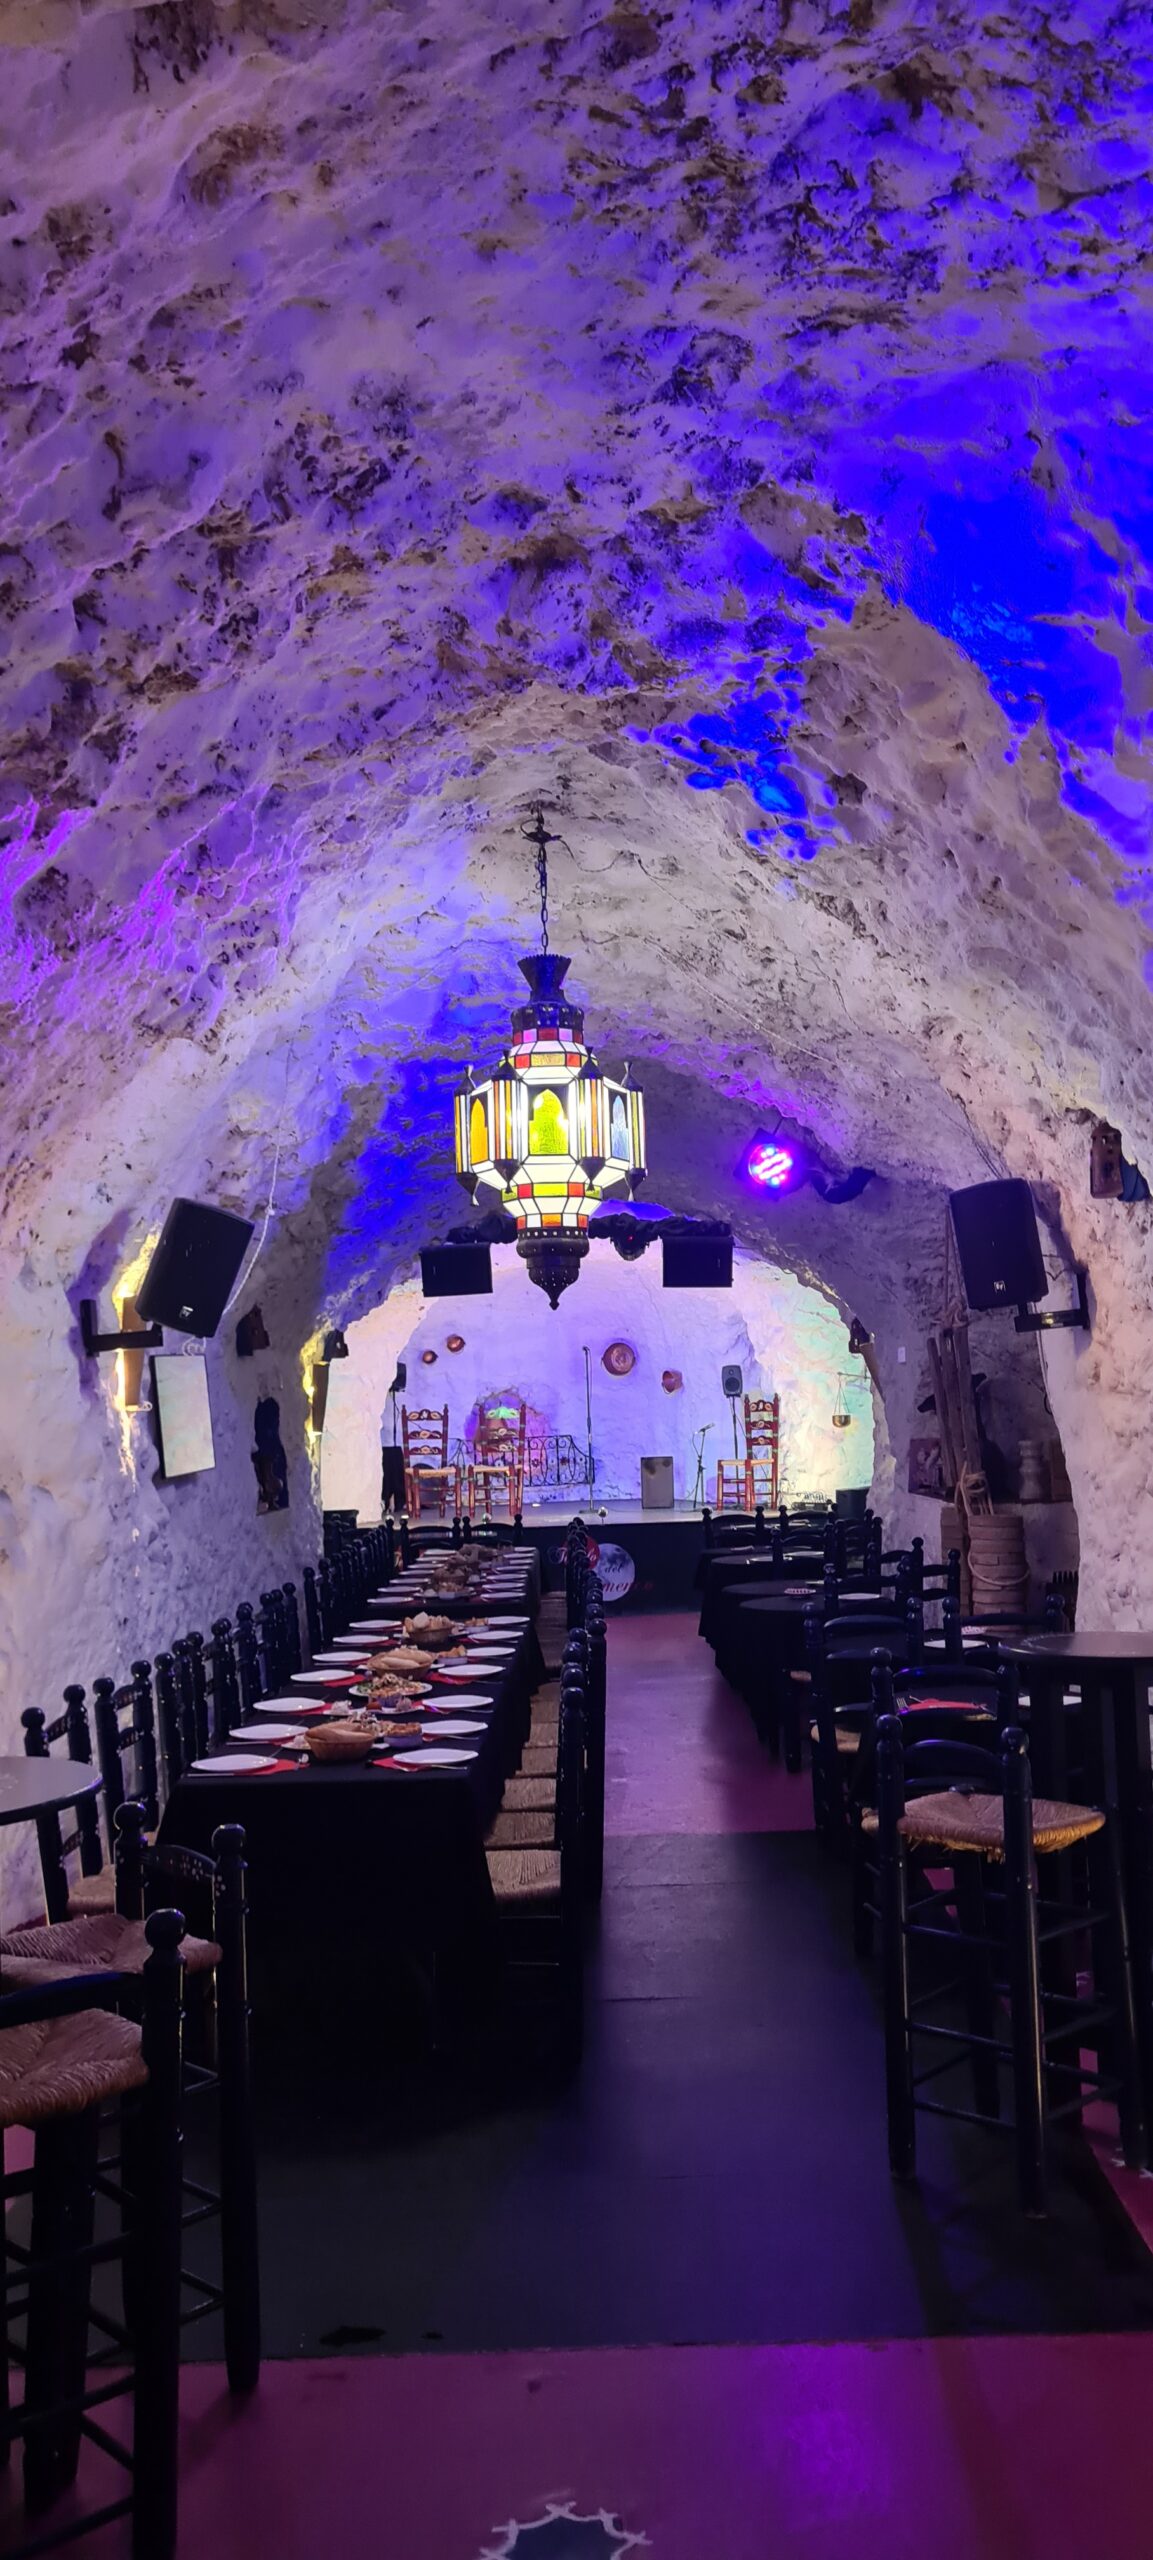 Flamenco Show in a Cave Restaurant in Granada